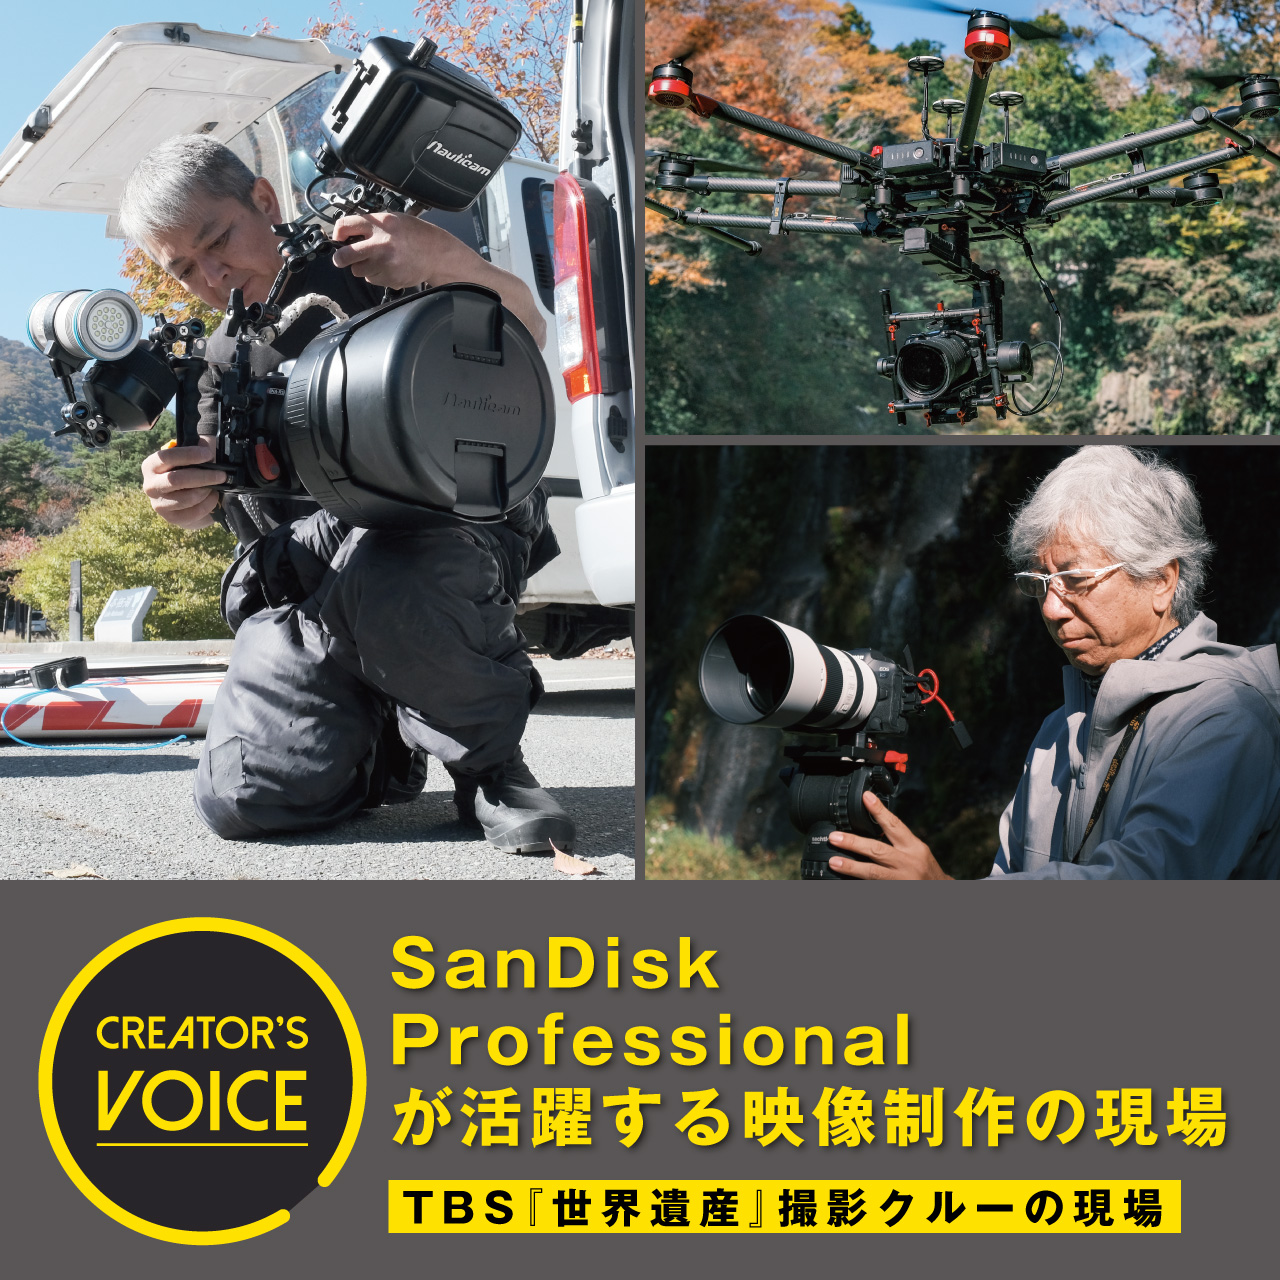 SanDisk Professional が活躍する映像制作の現場〜TBS『世界遺産』撮影クルーの現場